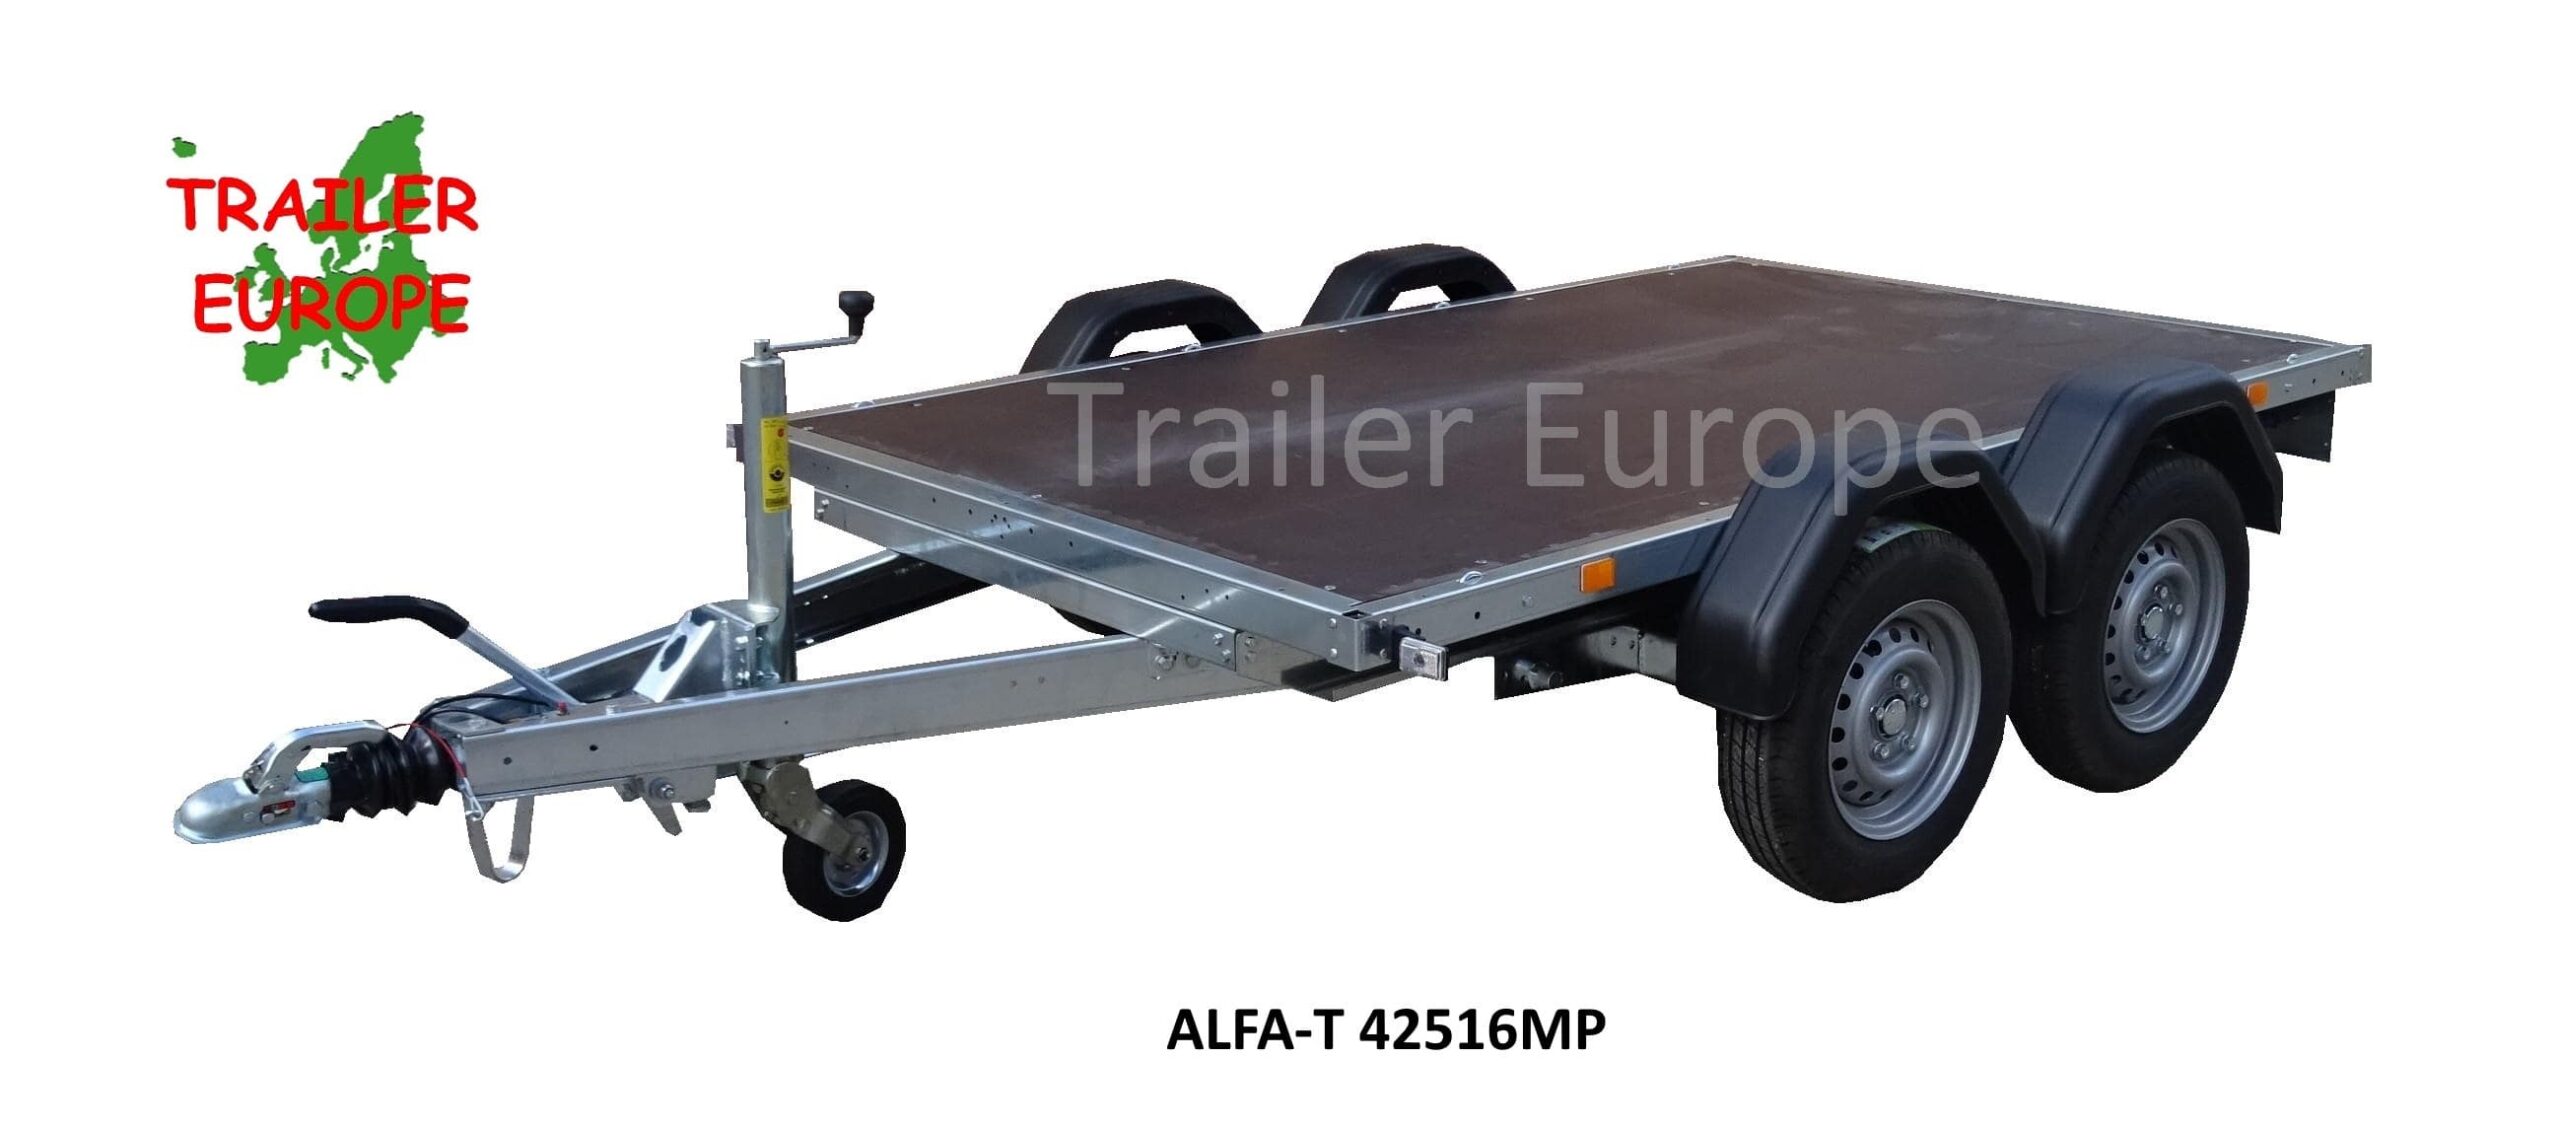 trailereurope_alfa-t-42518mp